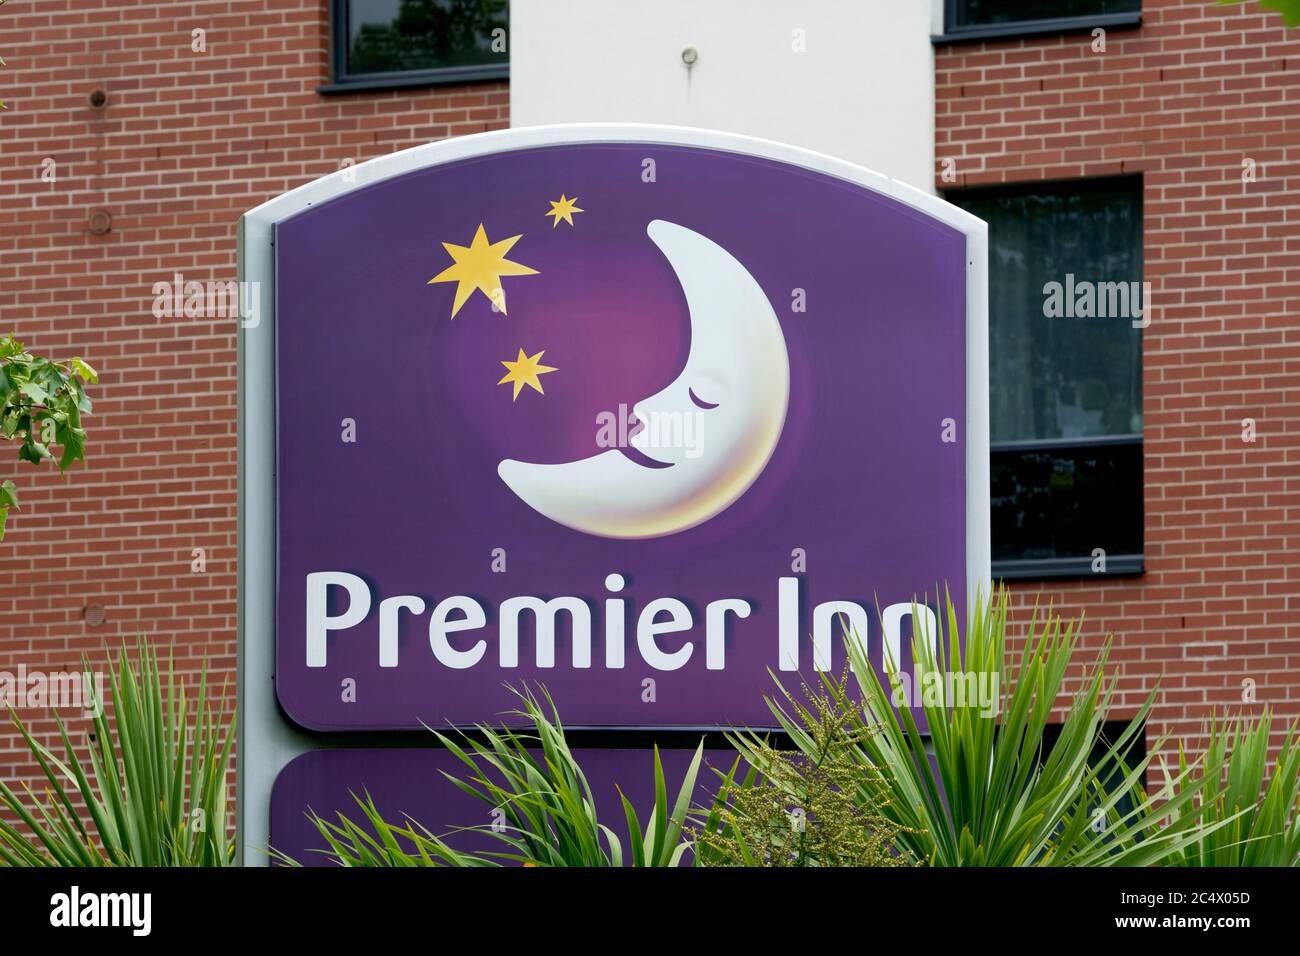 Premier Inn sign, Warwick, Warwickshire, England, UK Stock Photo